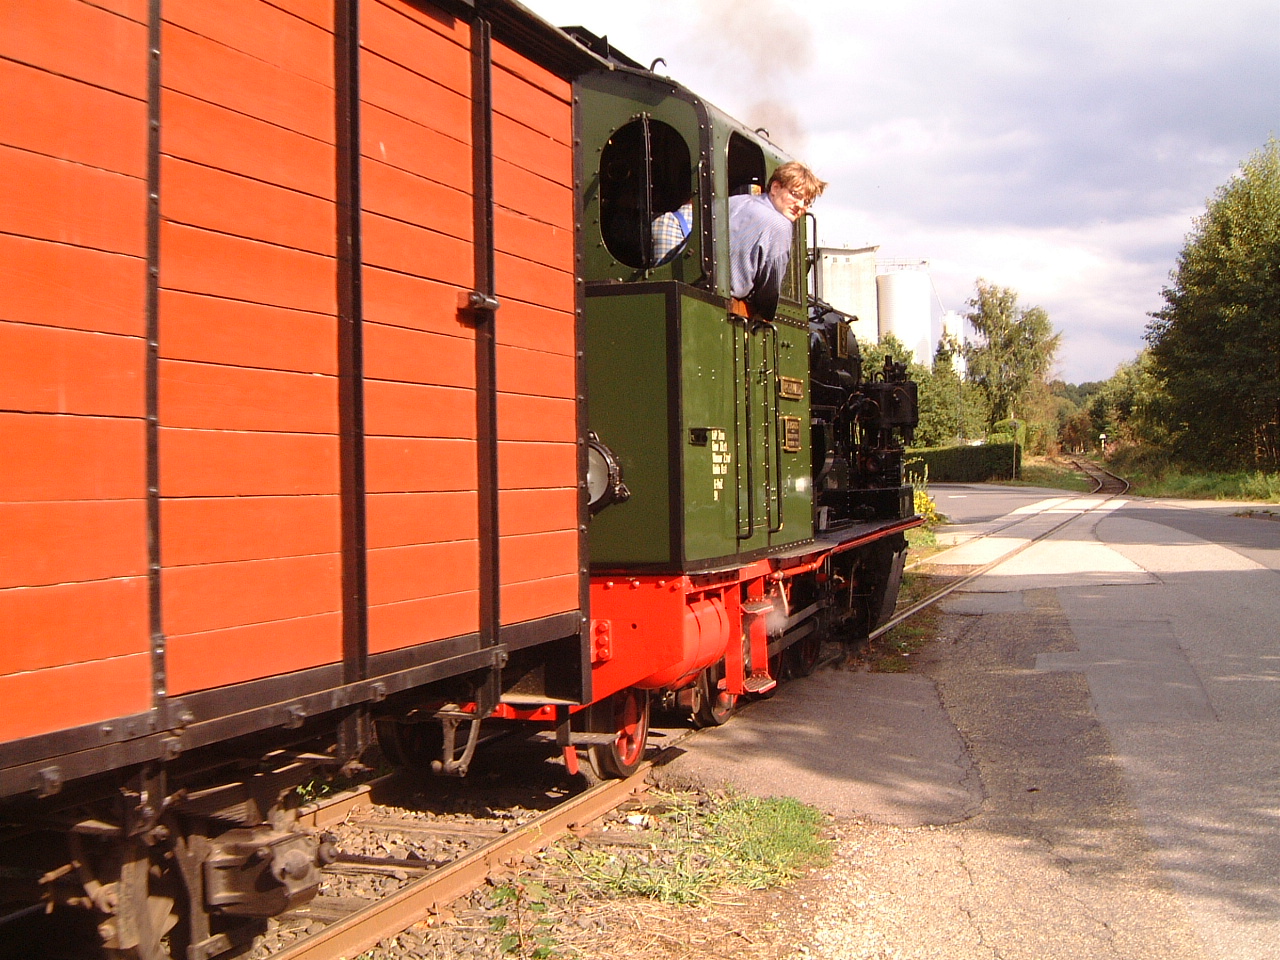 maartent train driver stoker old locomotive green red